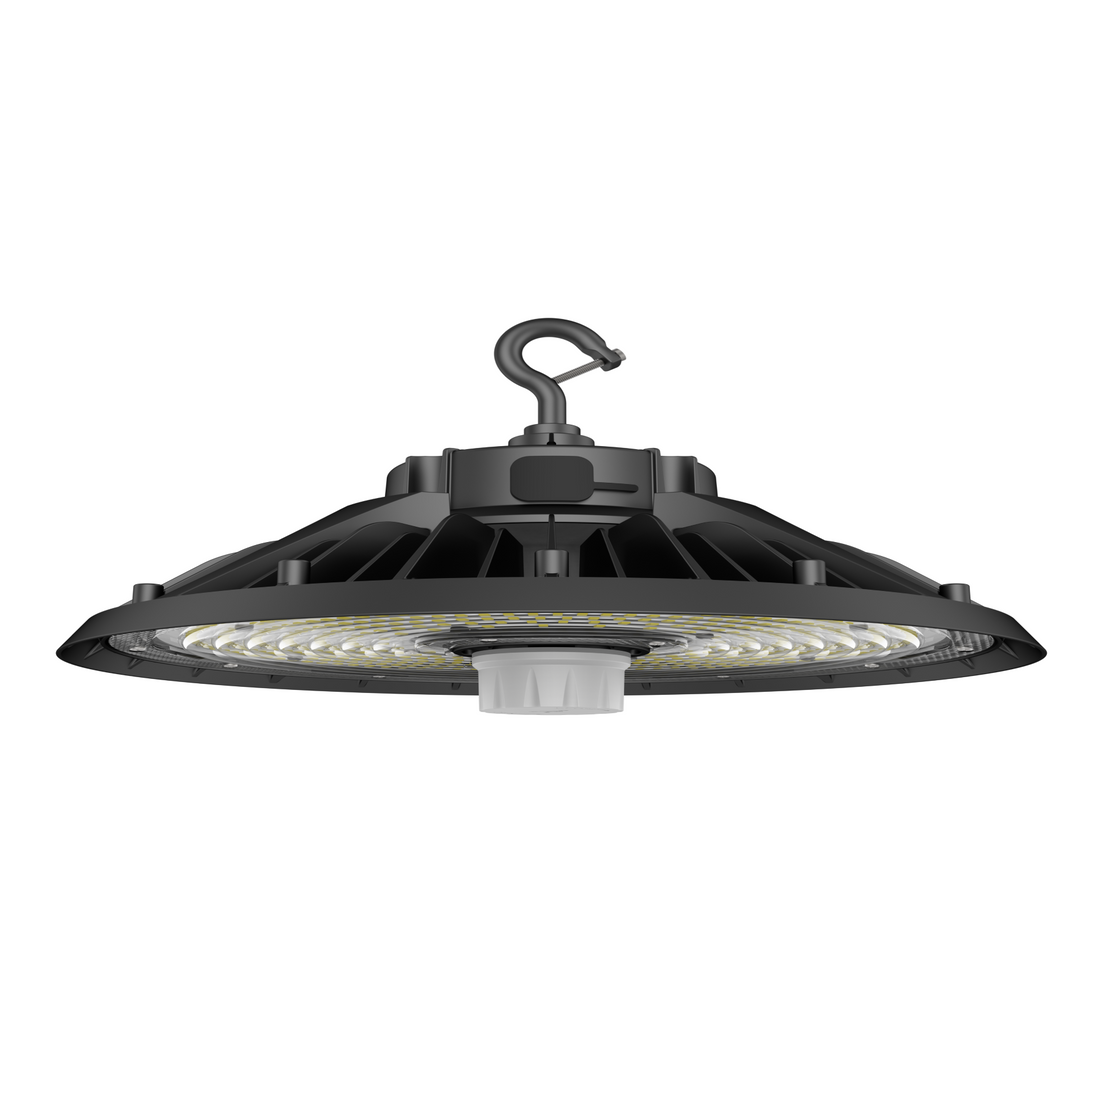 LED UFO High Bay Light 180W/200W/240W Wattage Adjustable - 5000K - 36240Lumens 0-10V Dimmable, With sensor base,120-277VAC DLC 5.1 Premium, Black